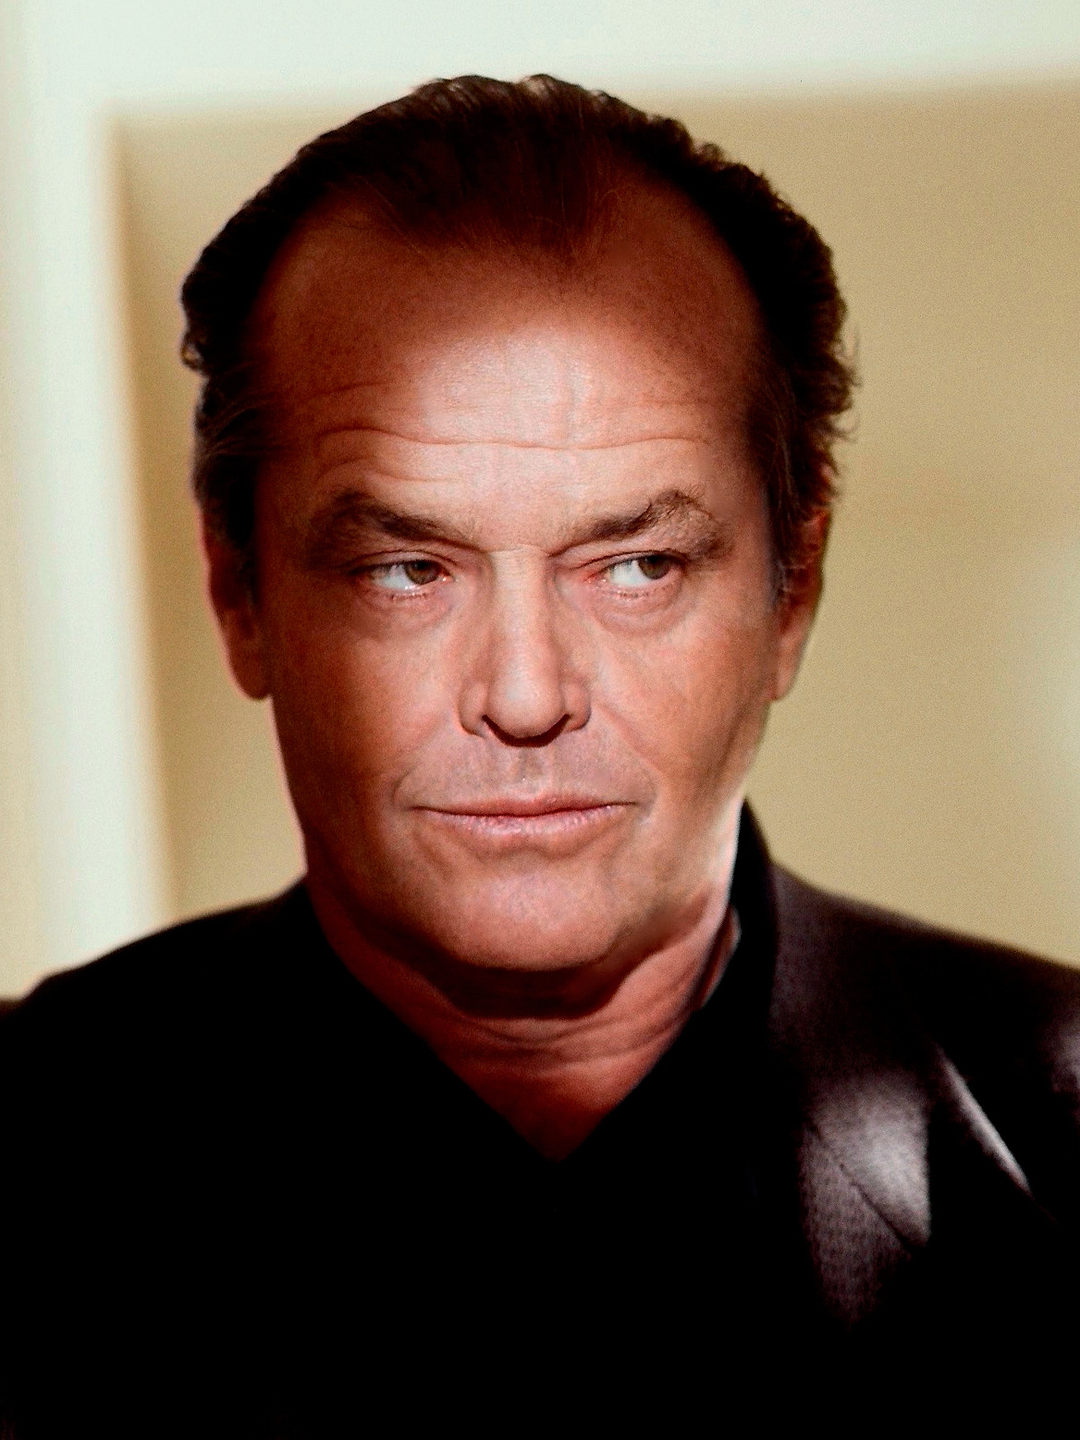 Jack Nicholson who is he